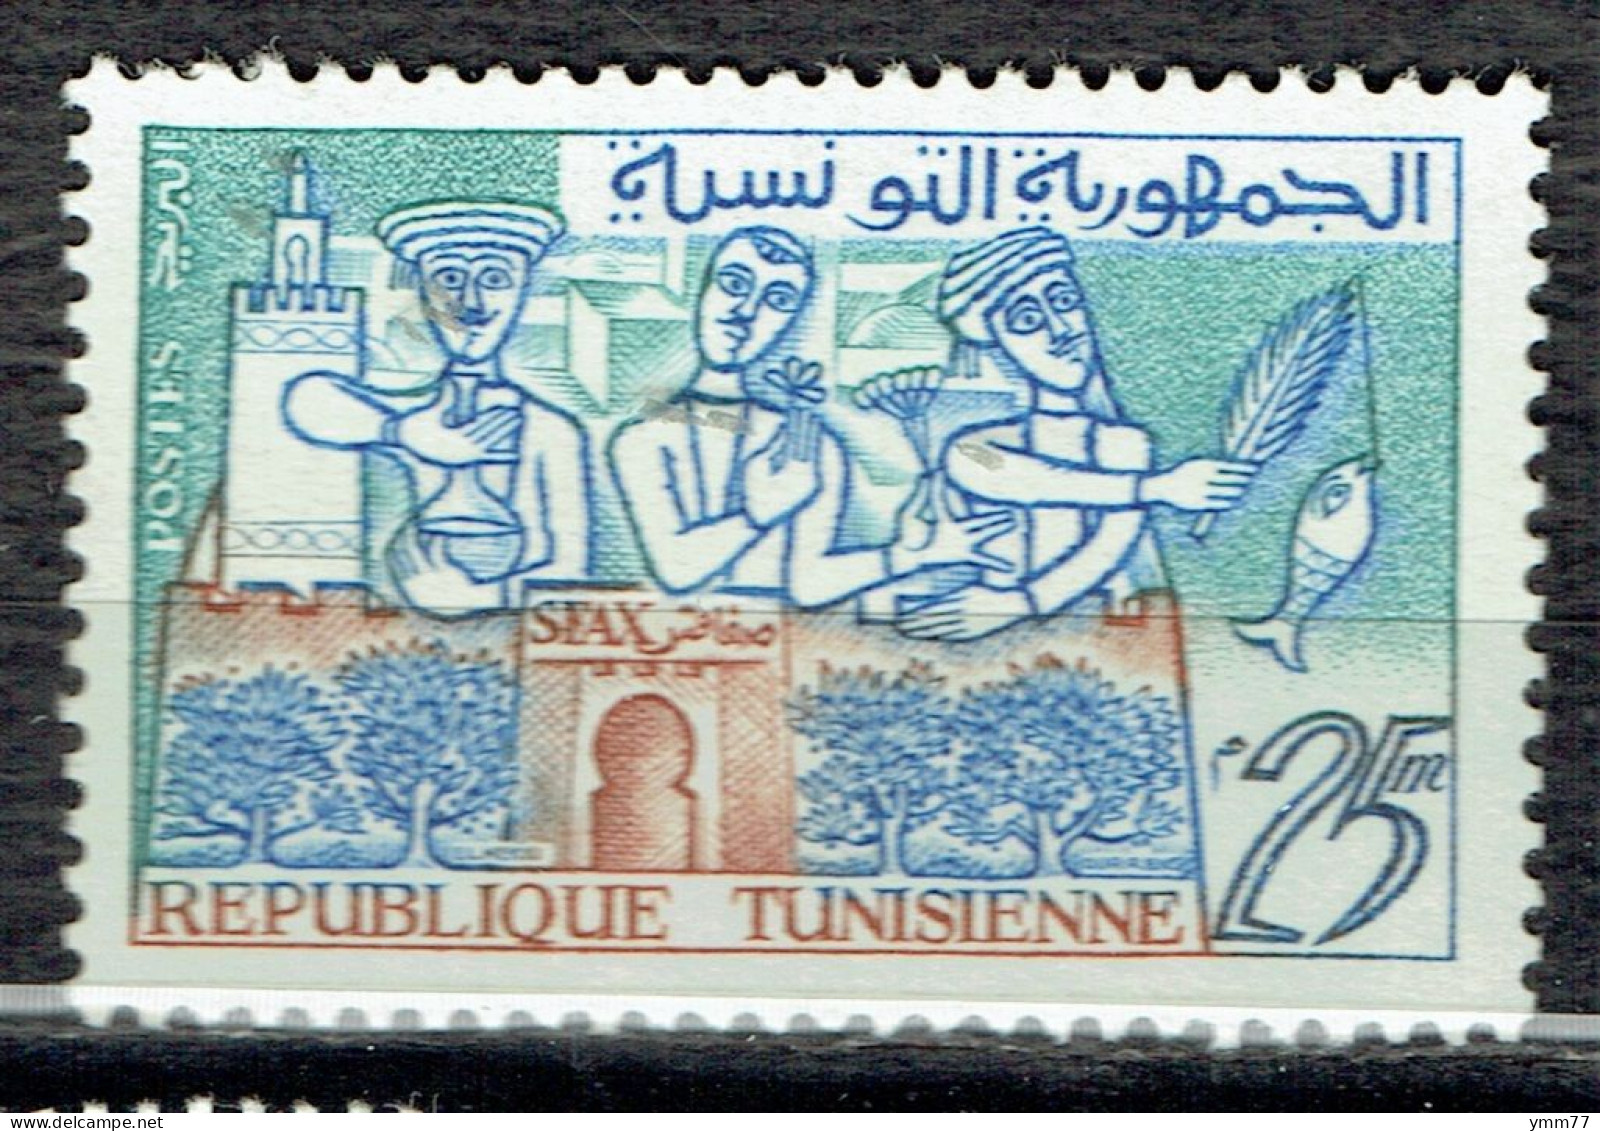 Série Courante : Sfax - Tunisie (1956-...)